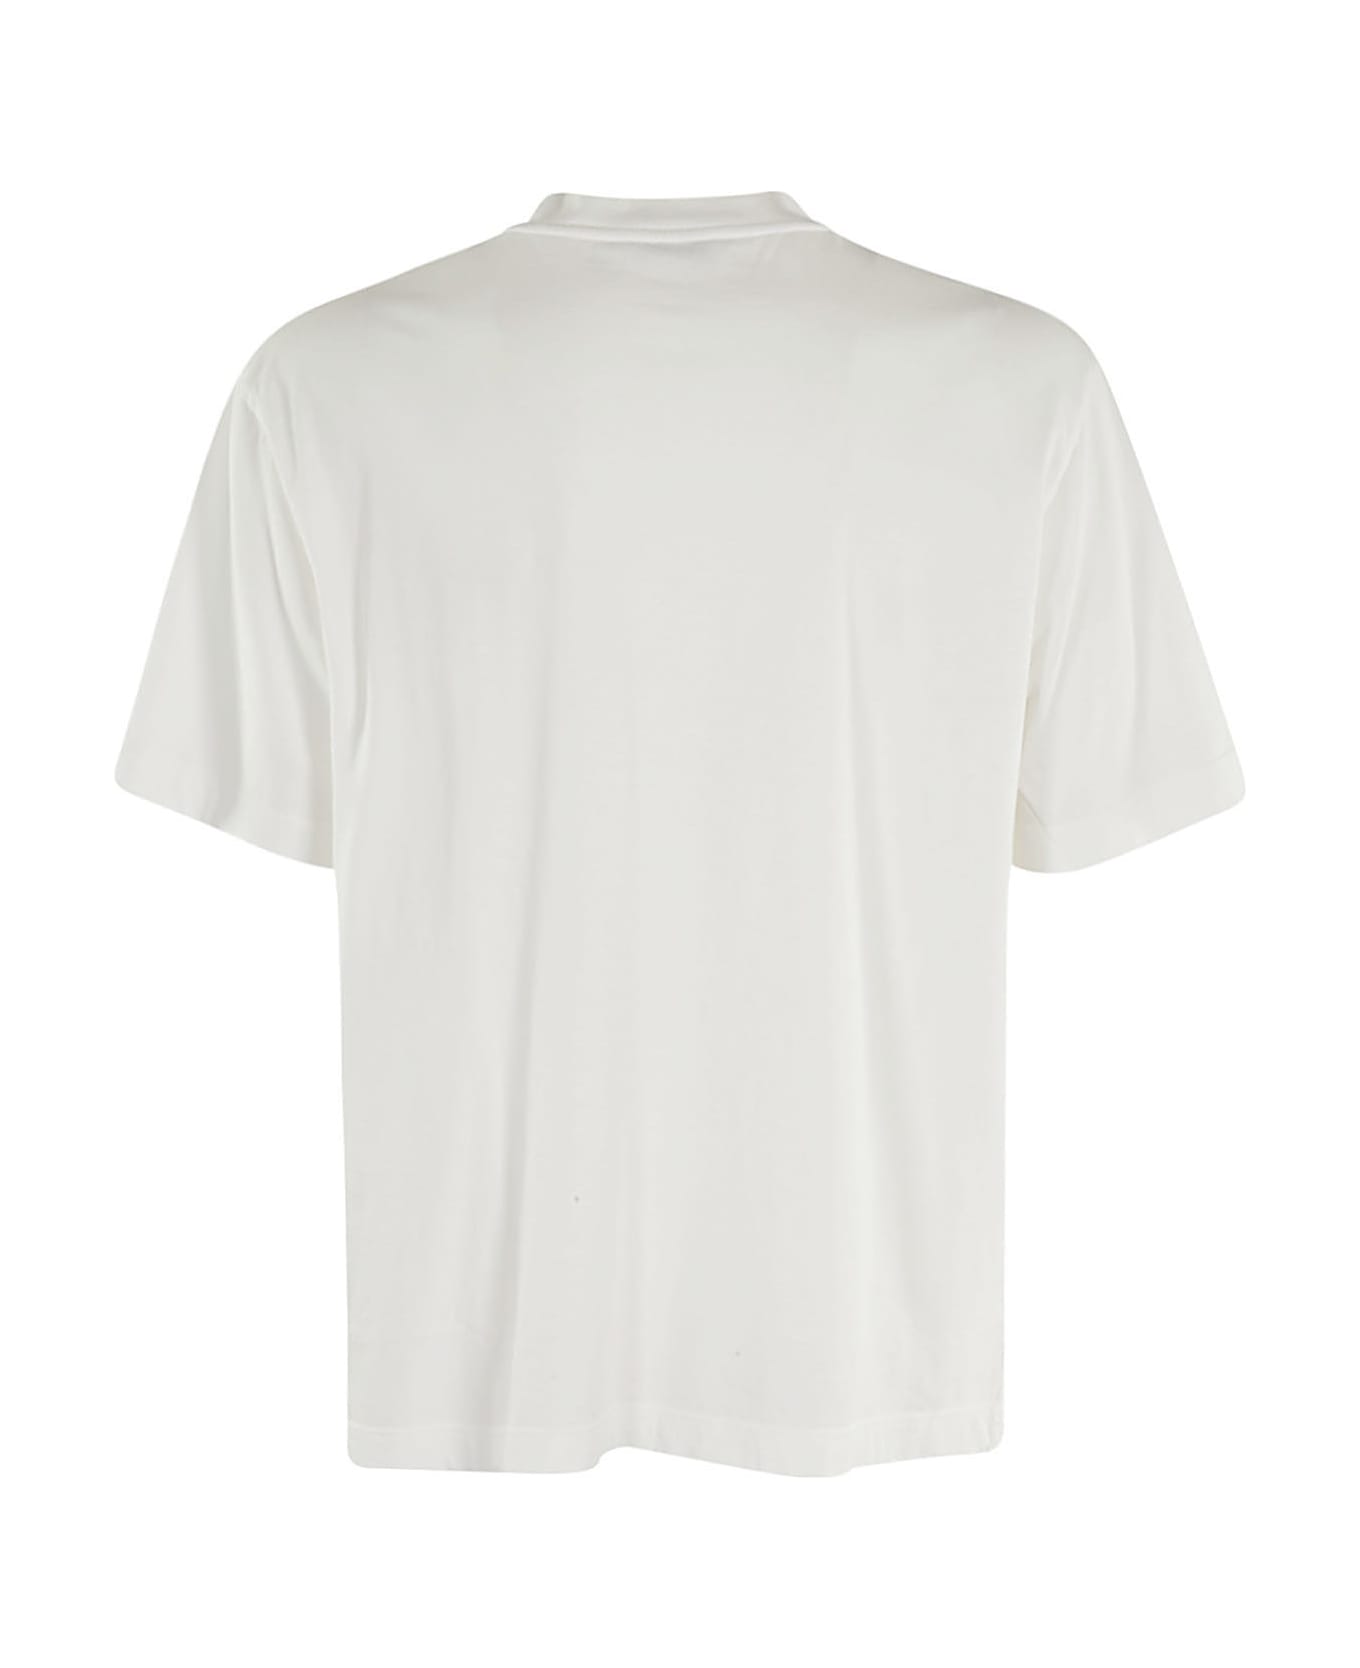 Paolo Pecora T Shirt Jersey - Panna シャツ